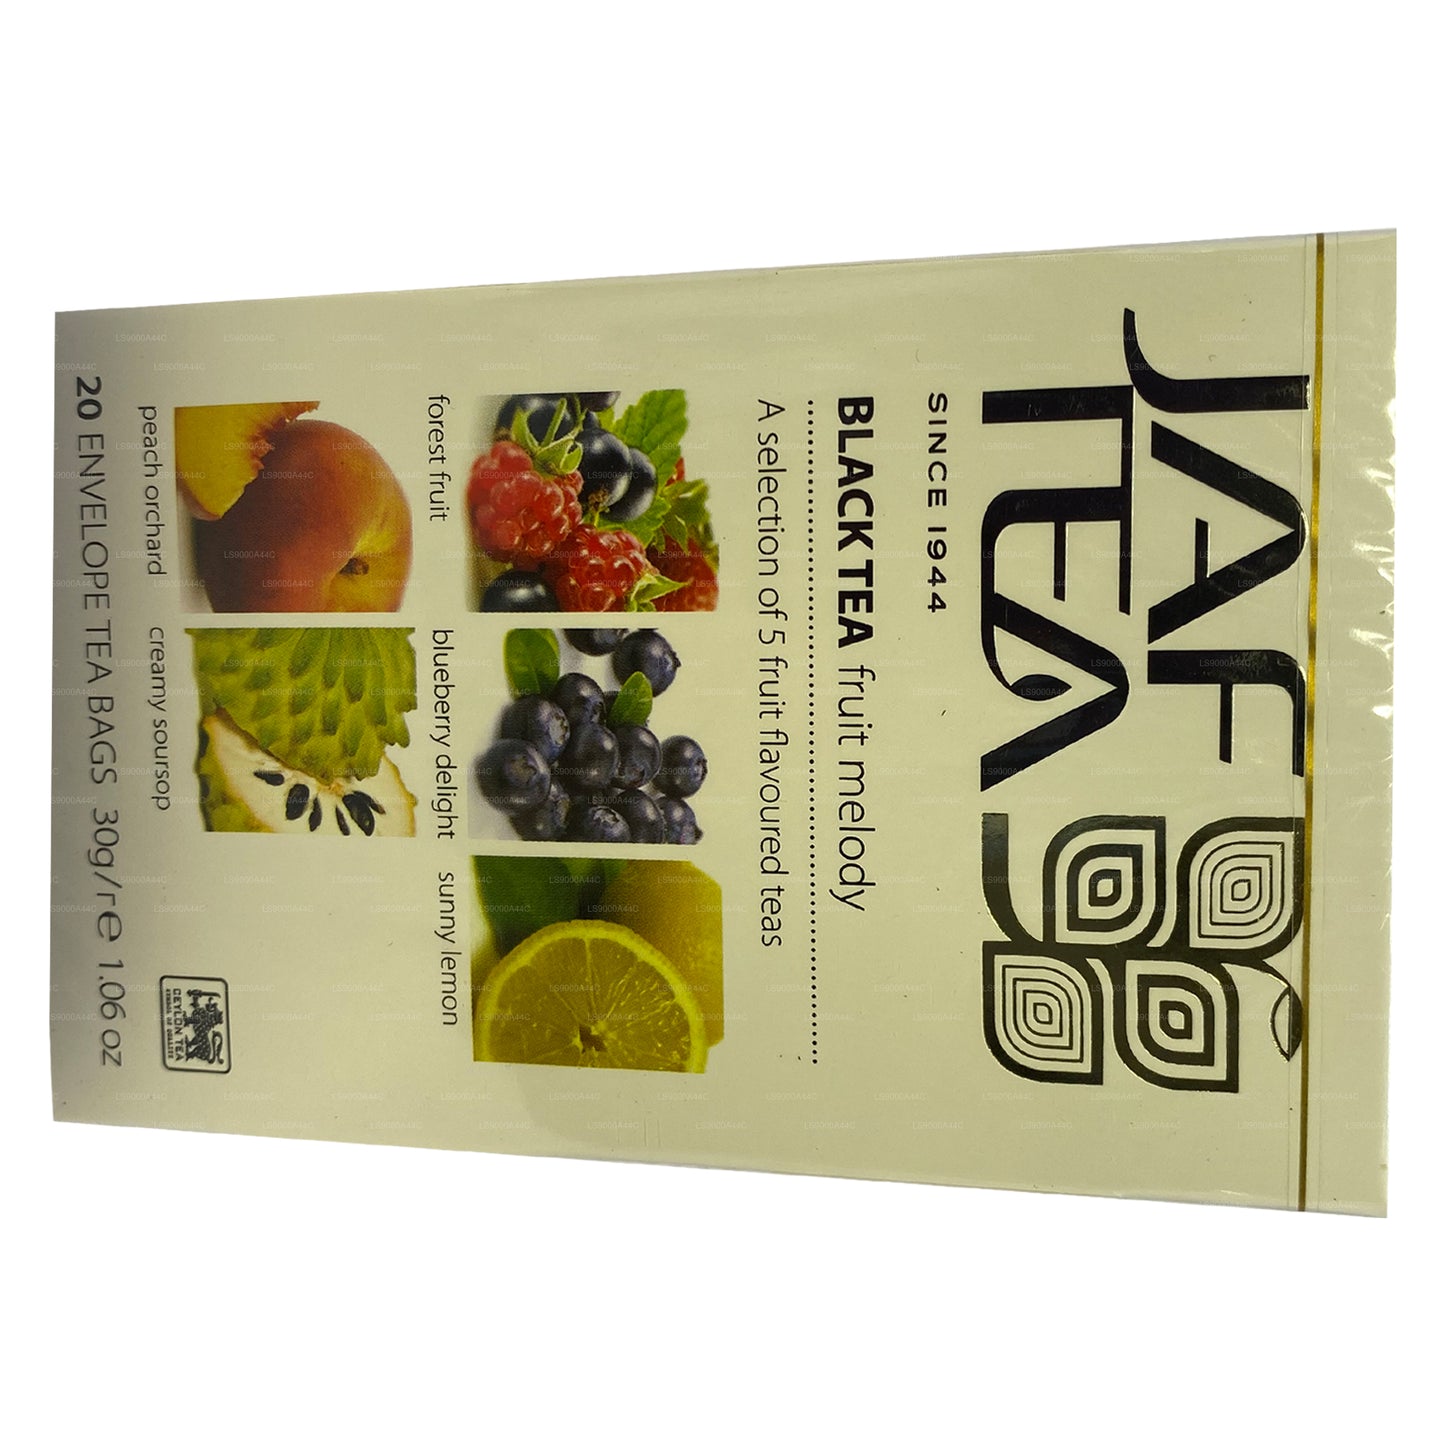 Jaf Tea Fruit Melody Black Tea (30g) Foil Envelop Tea Bags